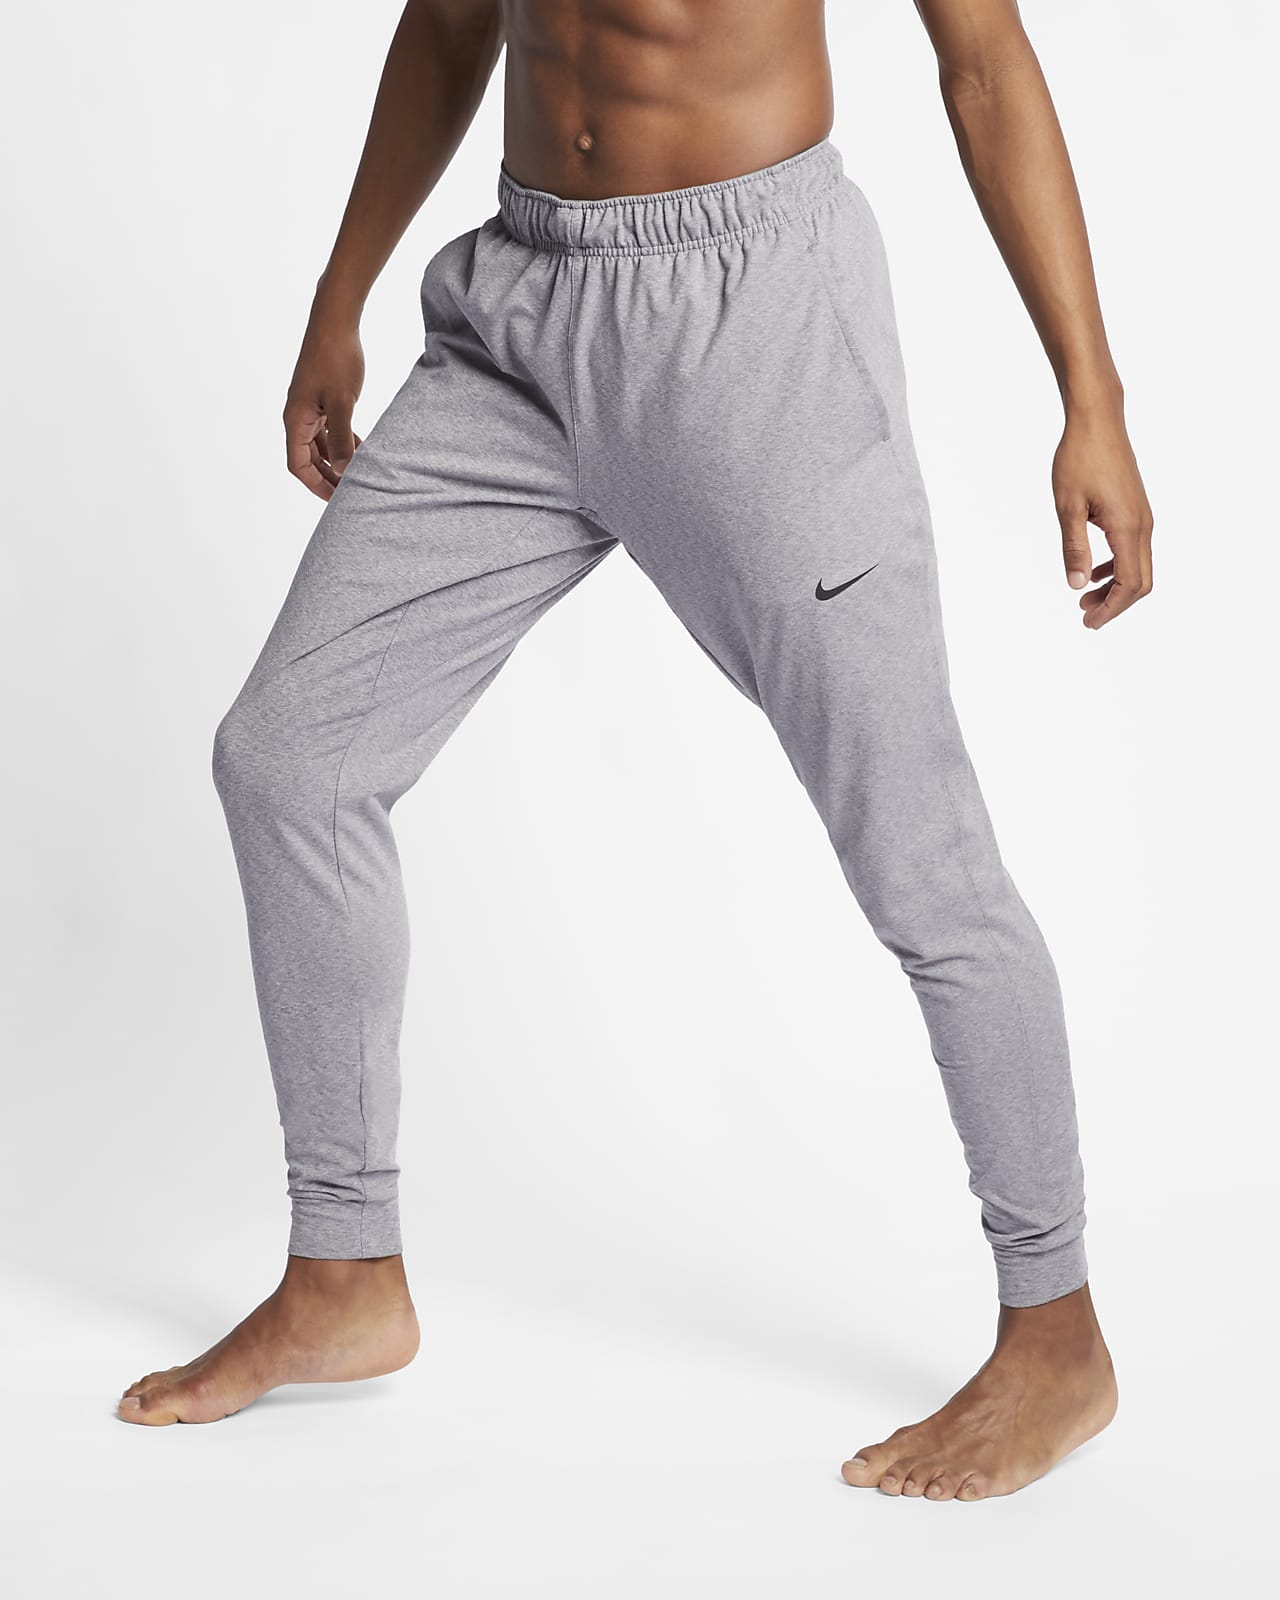 Buy > men's nike yoga pants > in stock